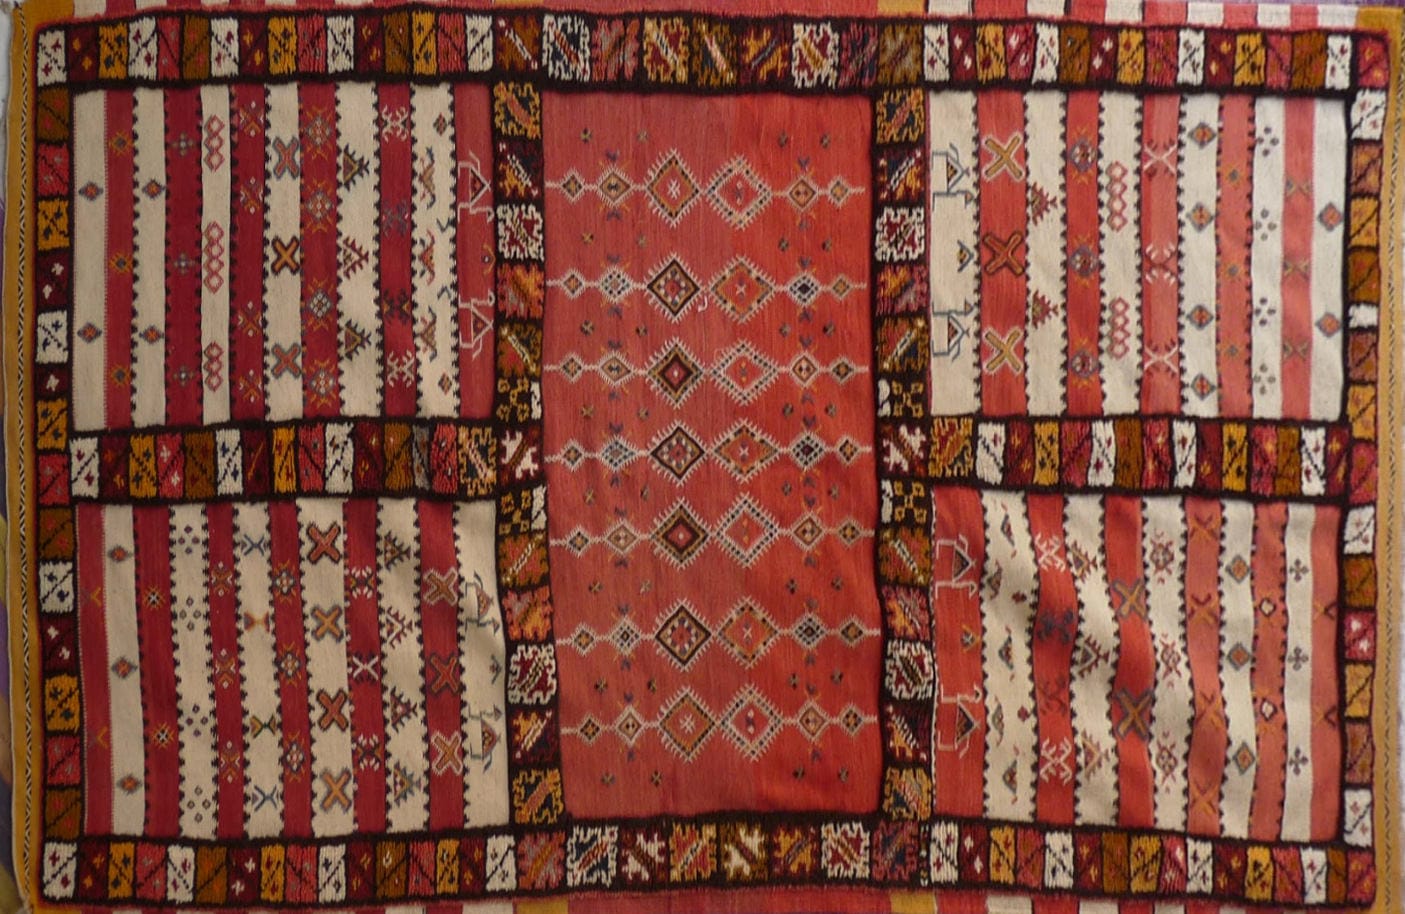 Vintage Middle Eastern or Moroccon Tapestry / Rug